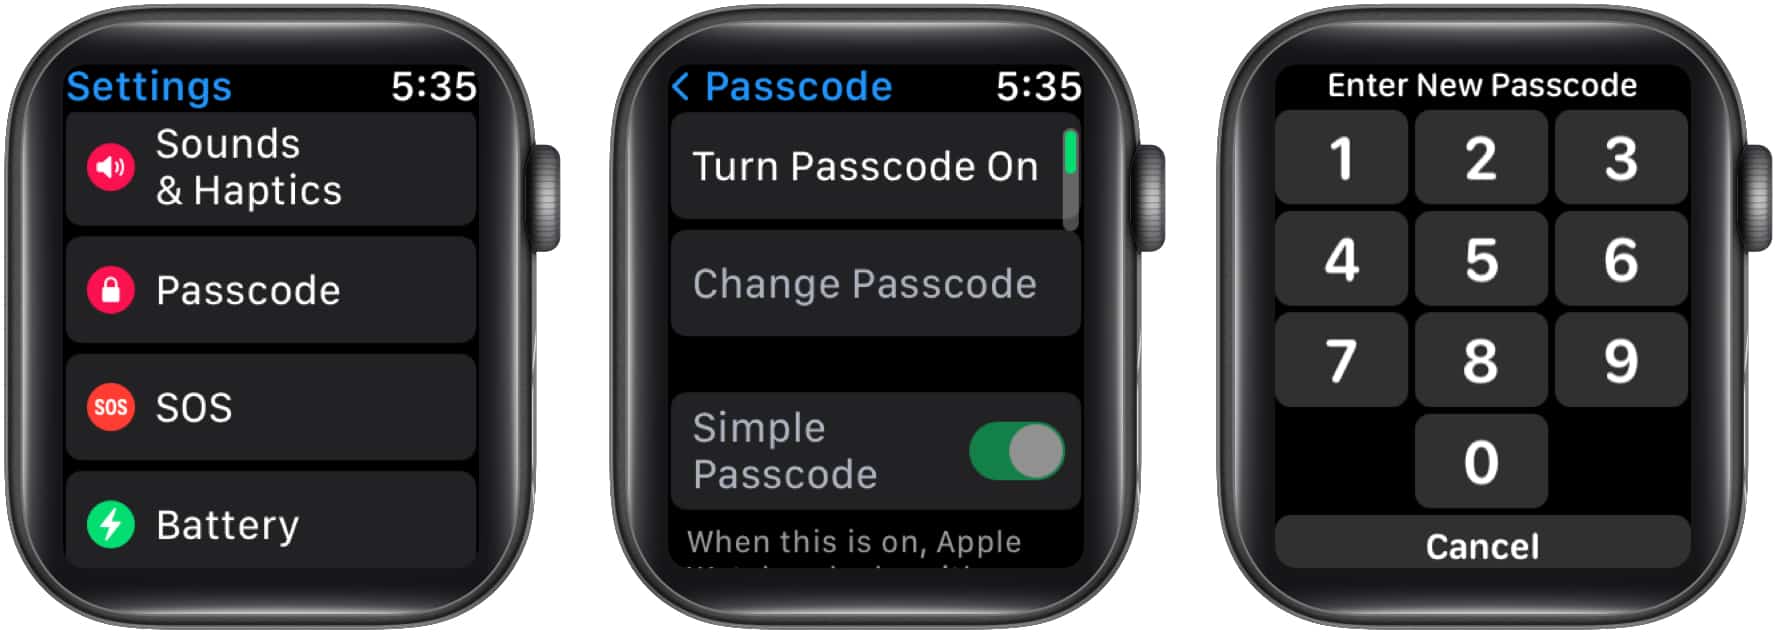 Set Passcode using Apple Watch